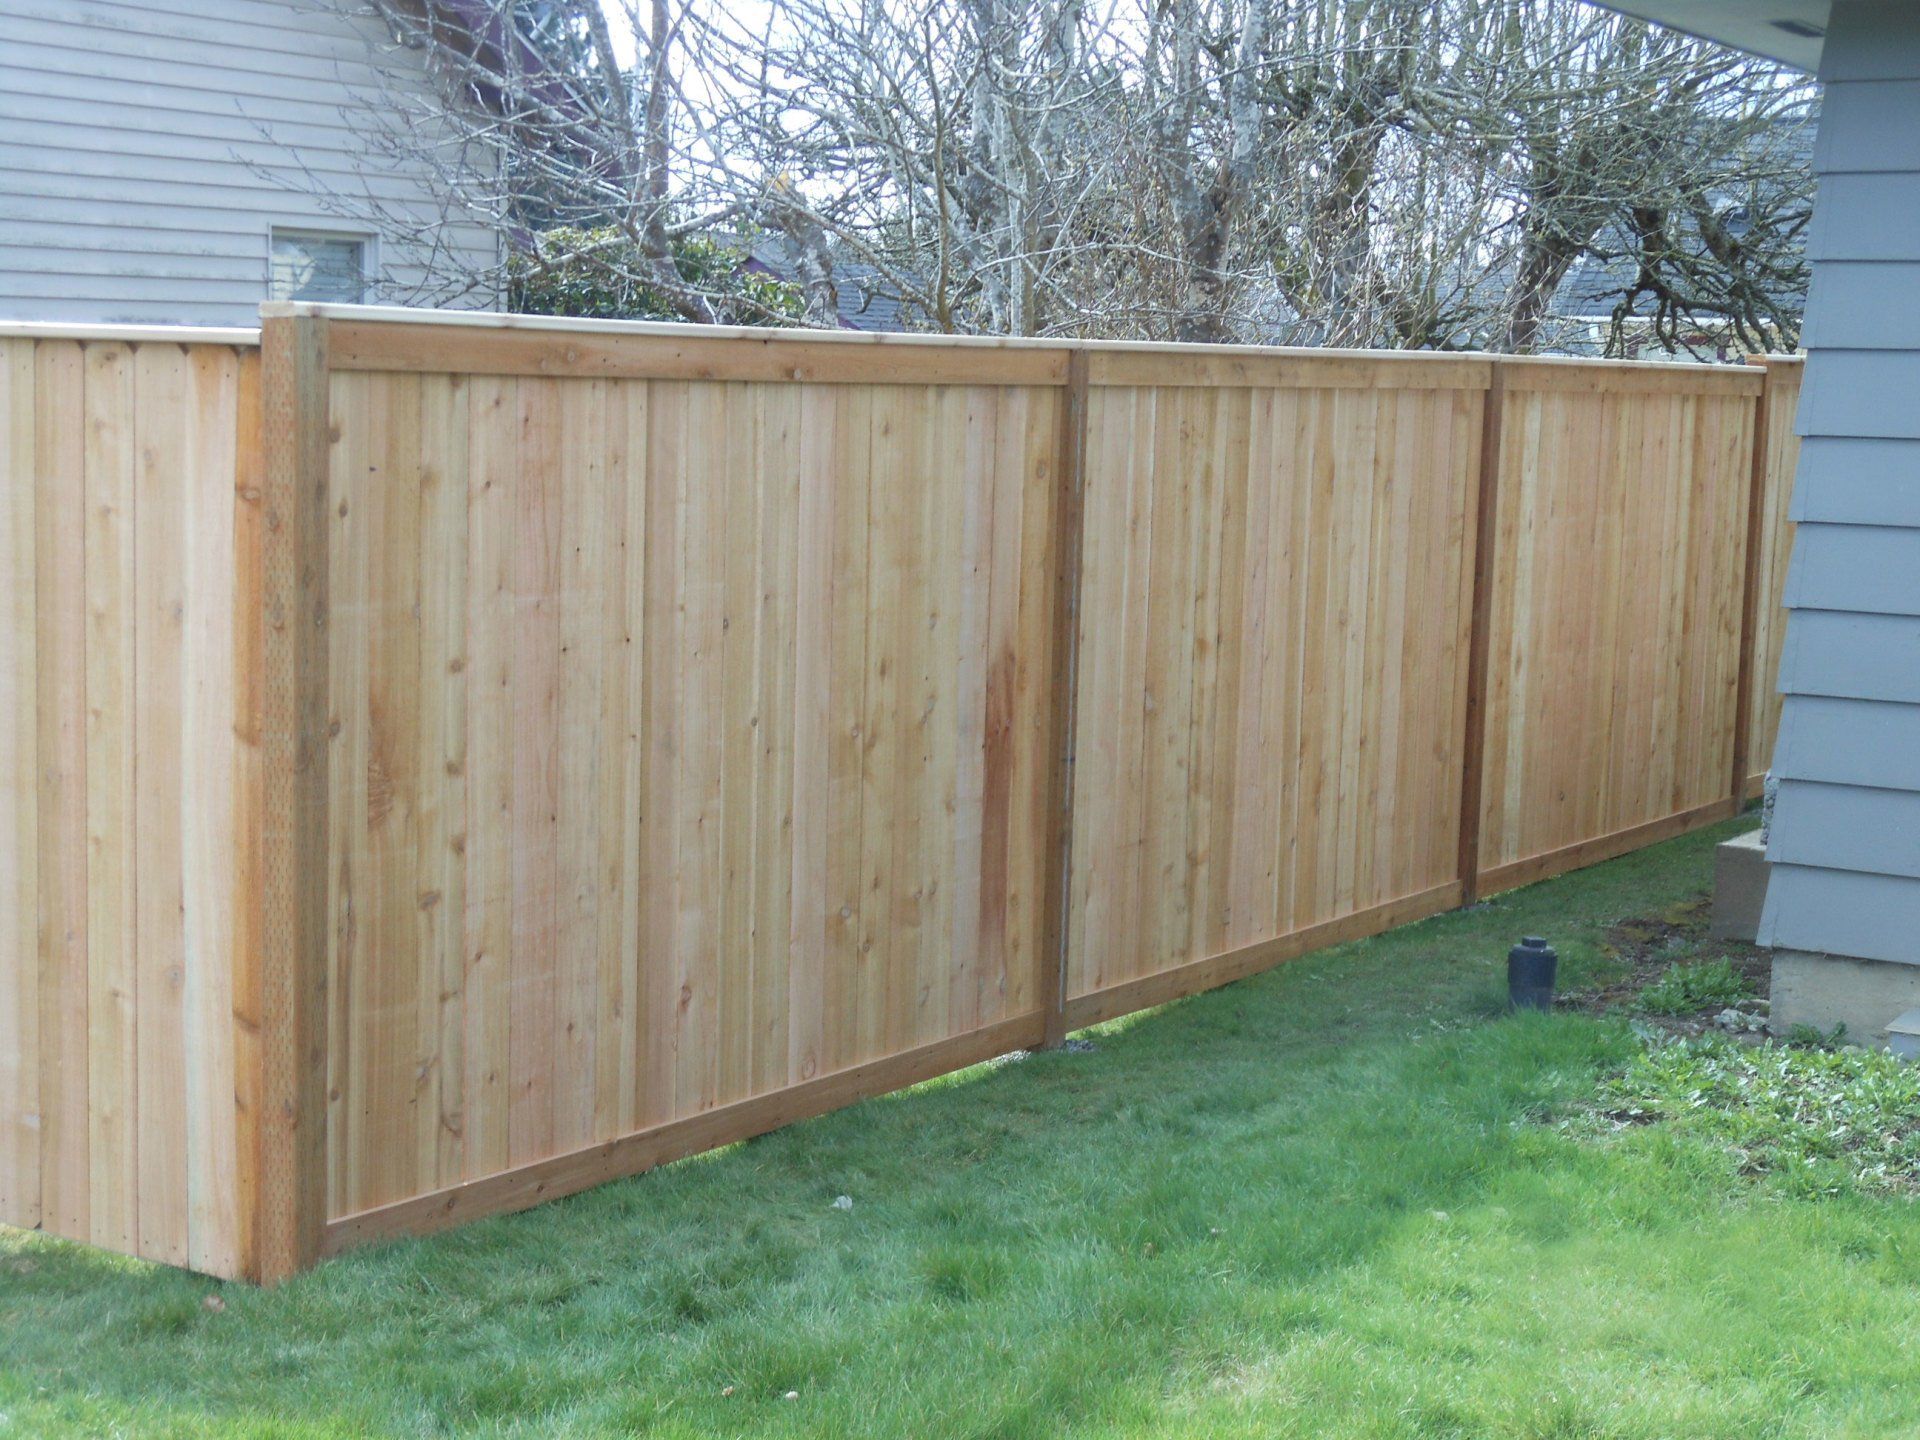 Newly installed fences — Garden fencing Installation in Fermdale, WA